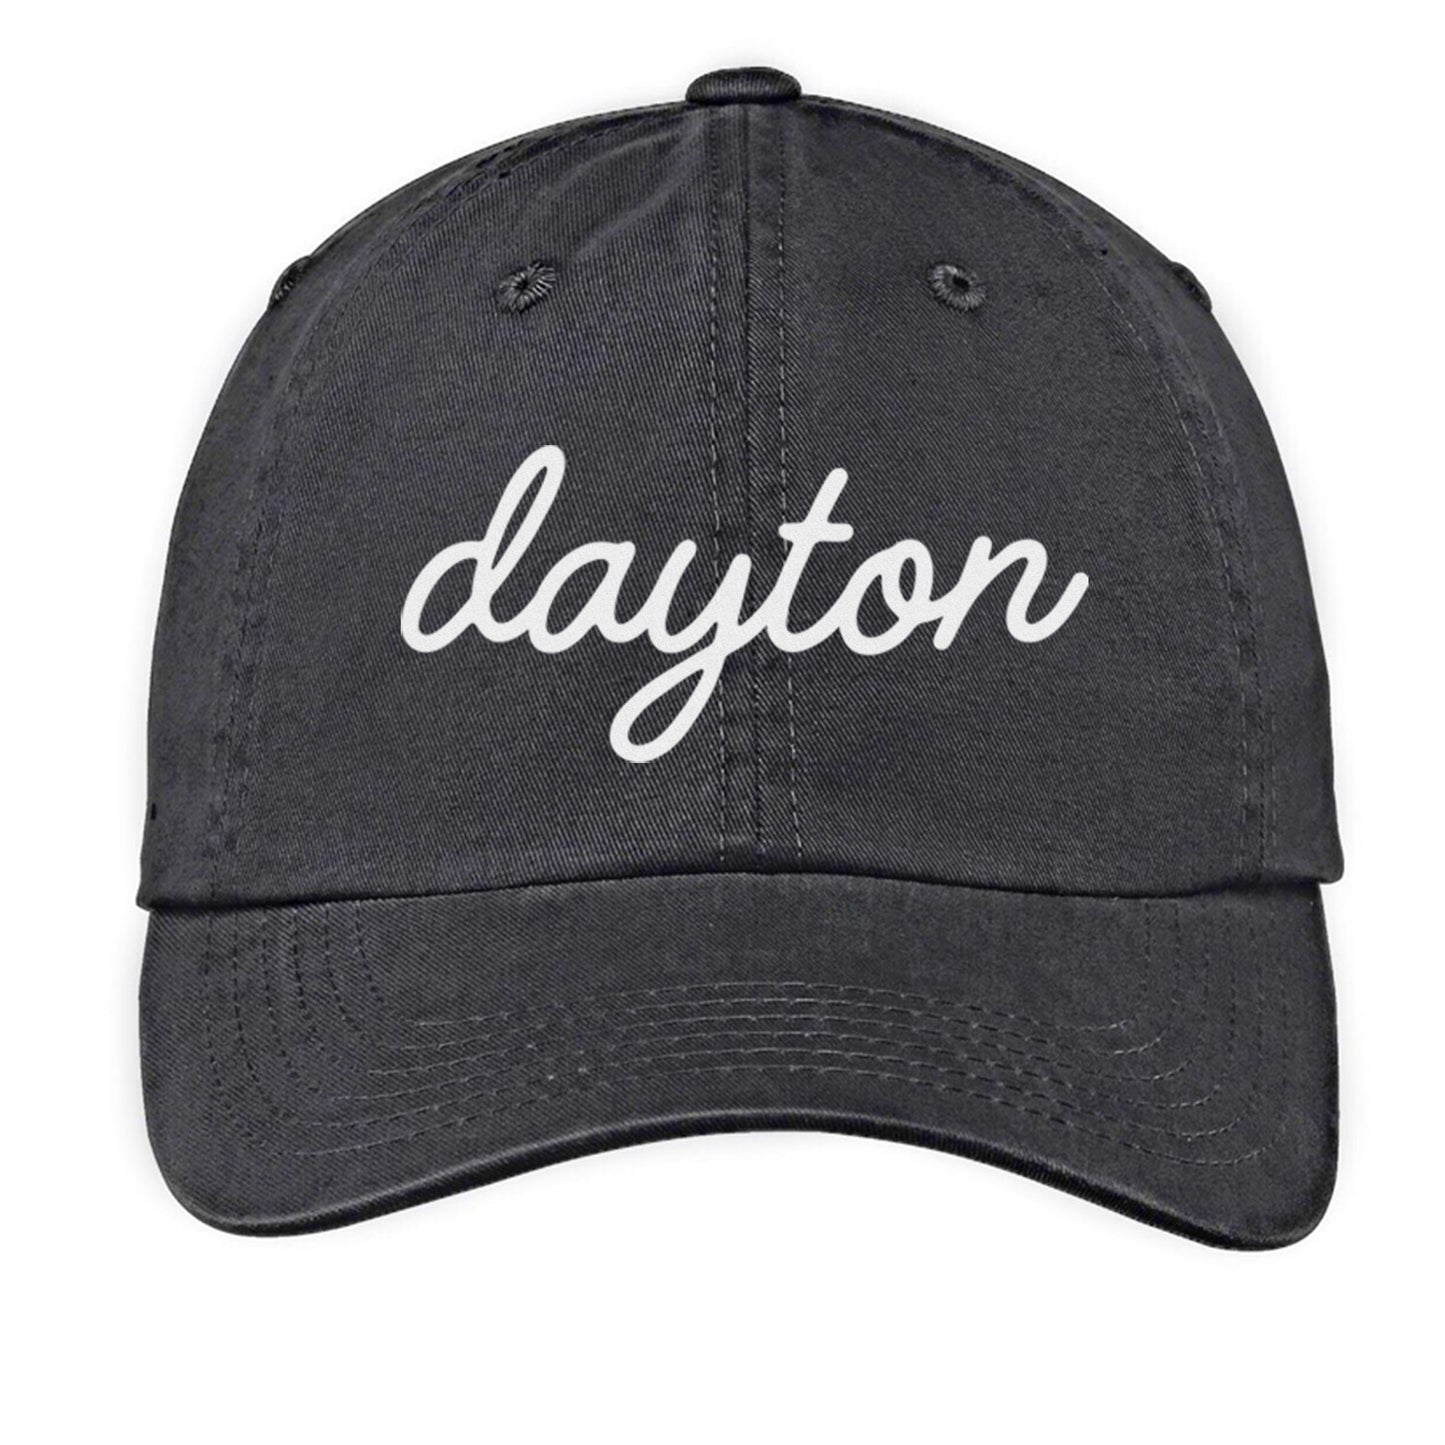 Dayton Cursive Baseball Cap